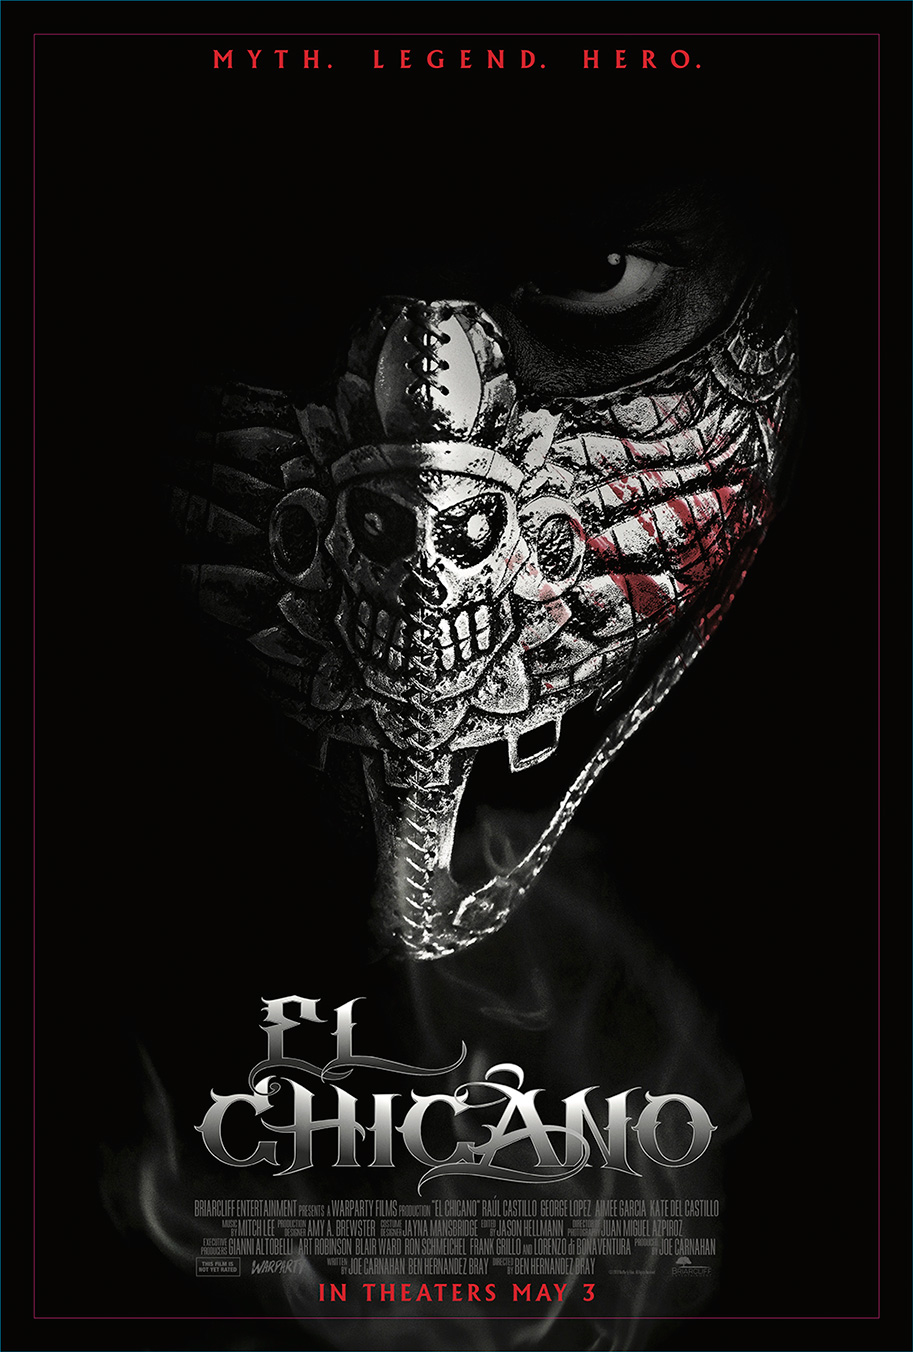 El Chicano, drama, Briarcliff Entertainment